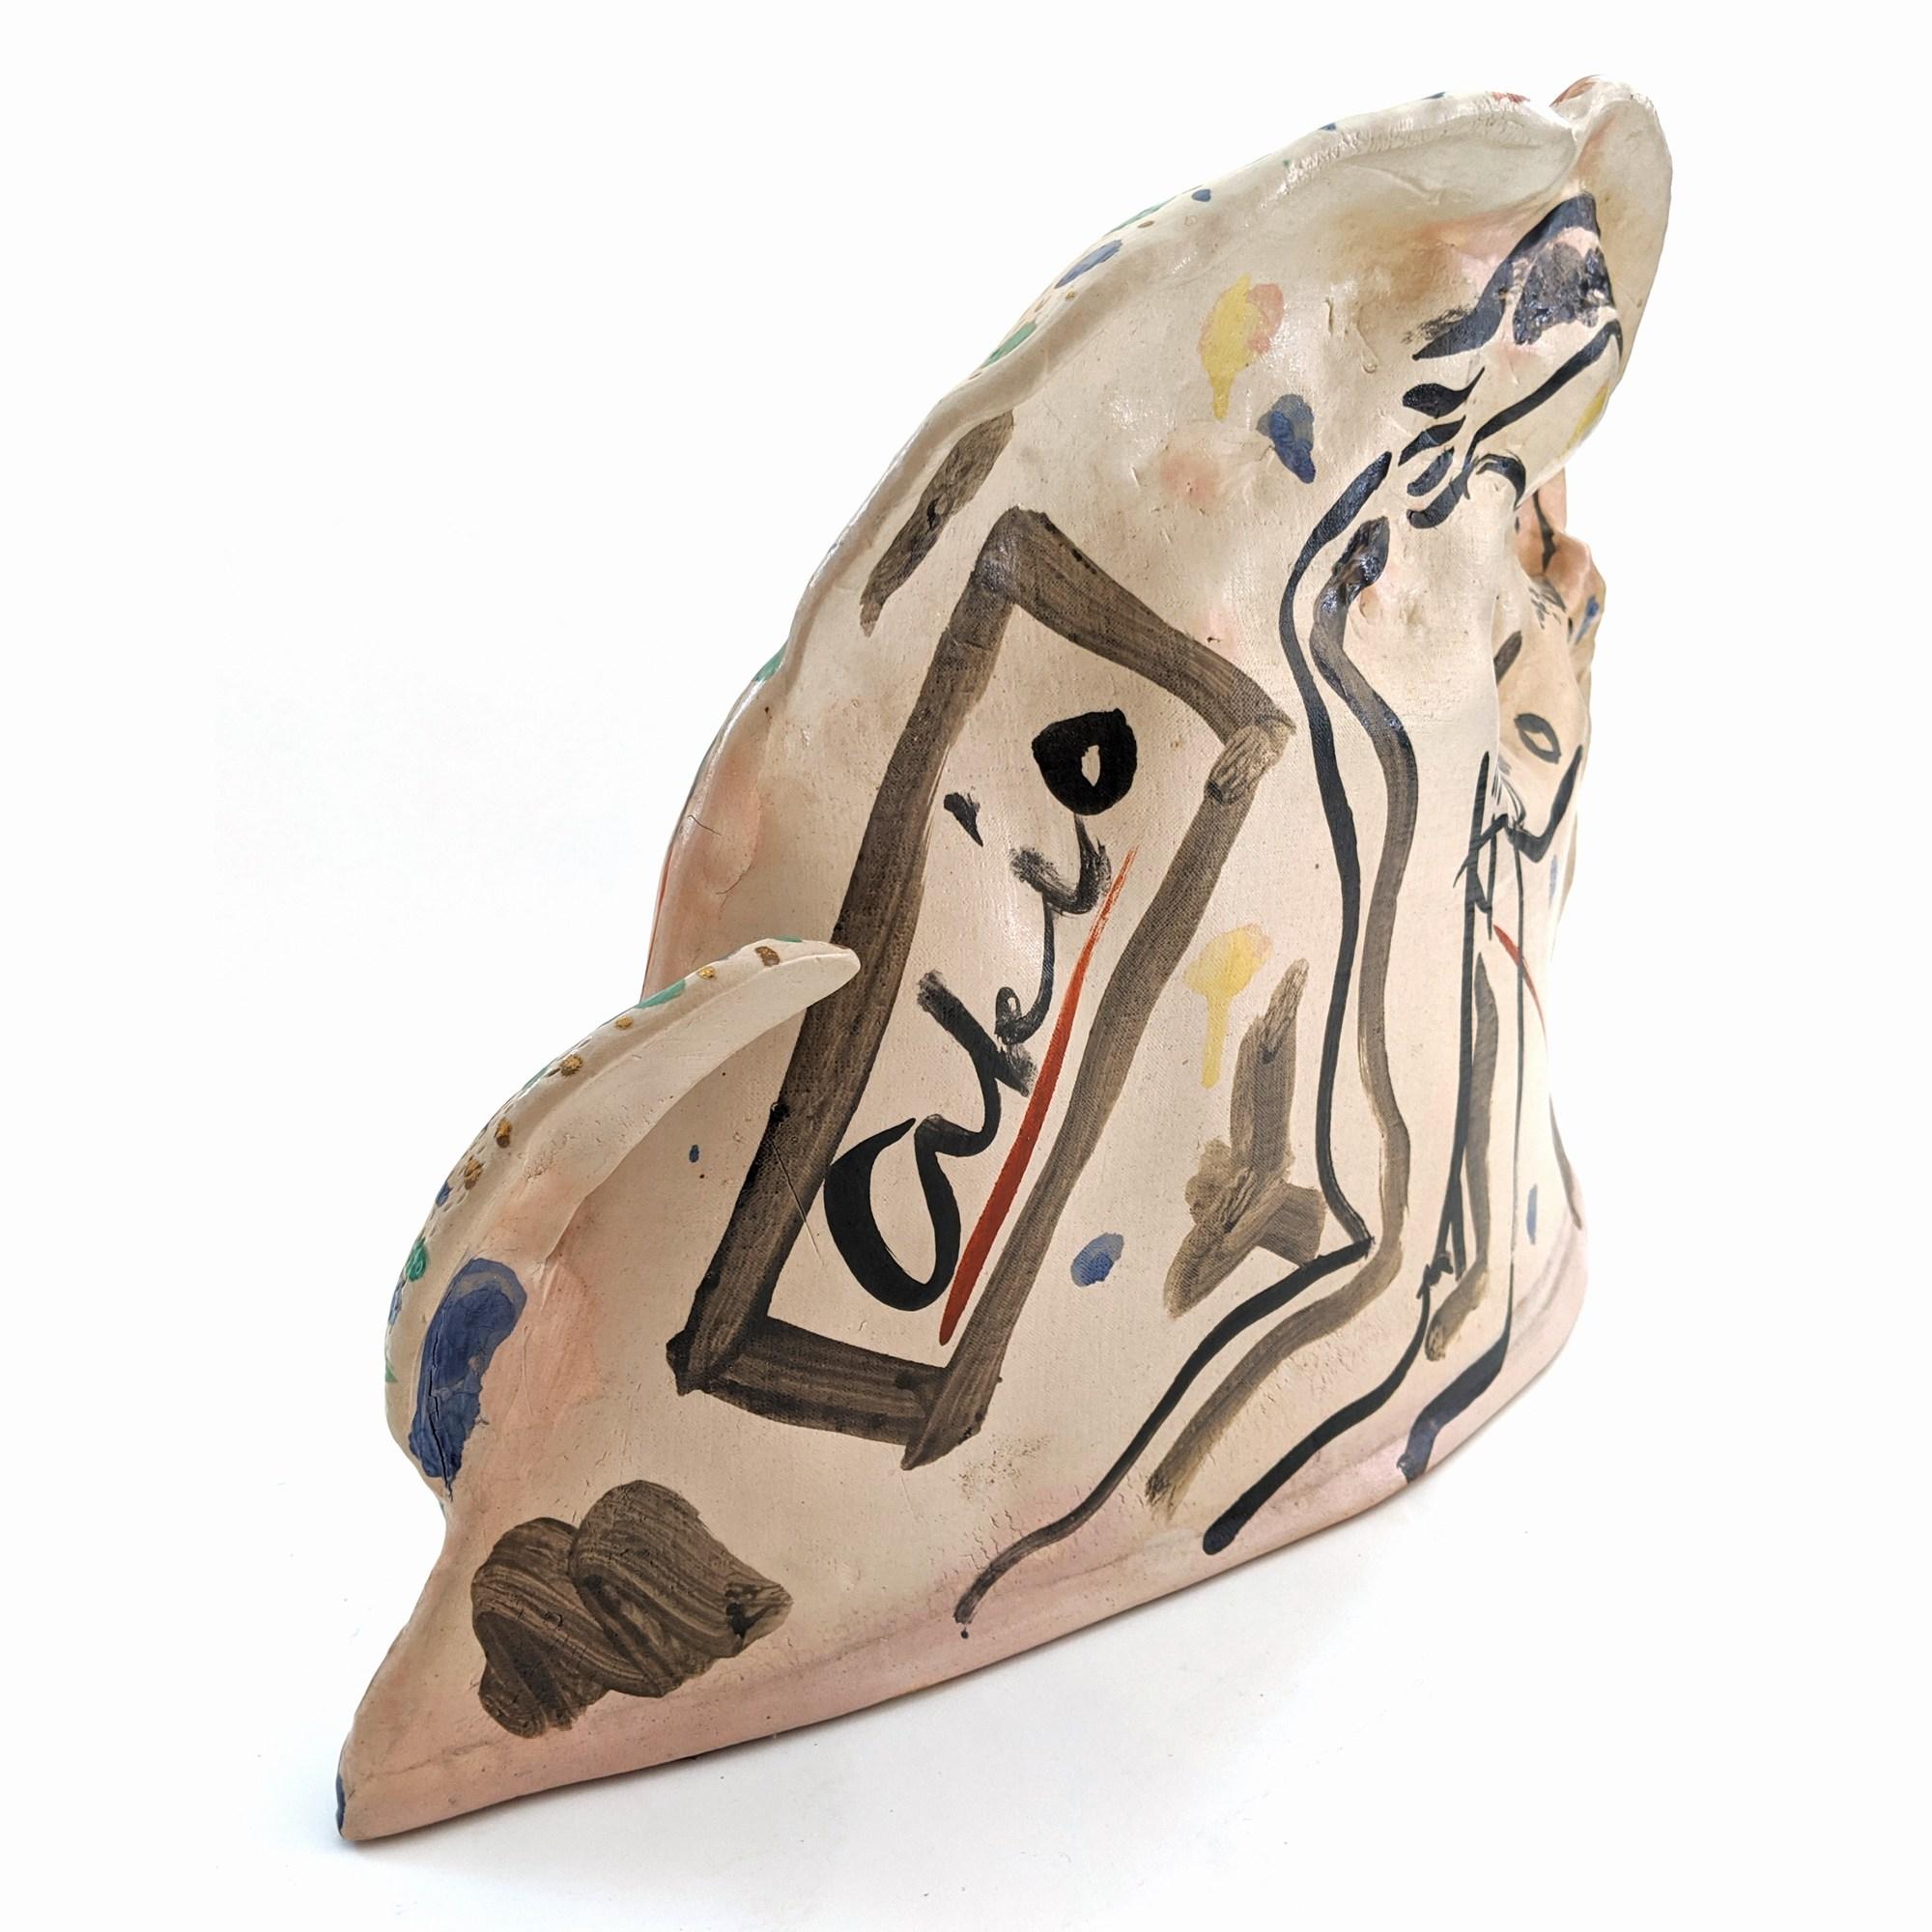 Artist : Akio Takamori
Title : Large Envelope Vase
Materials : Stoneware Clay, Glaze, Colored Slips, Gold
Date : 1975
Dimensions : 16 in. x 24 in. x 6 in.

Takamori was born in Nobeoka, Miyazaki, Japan in 1950 October 11. The son of an